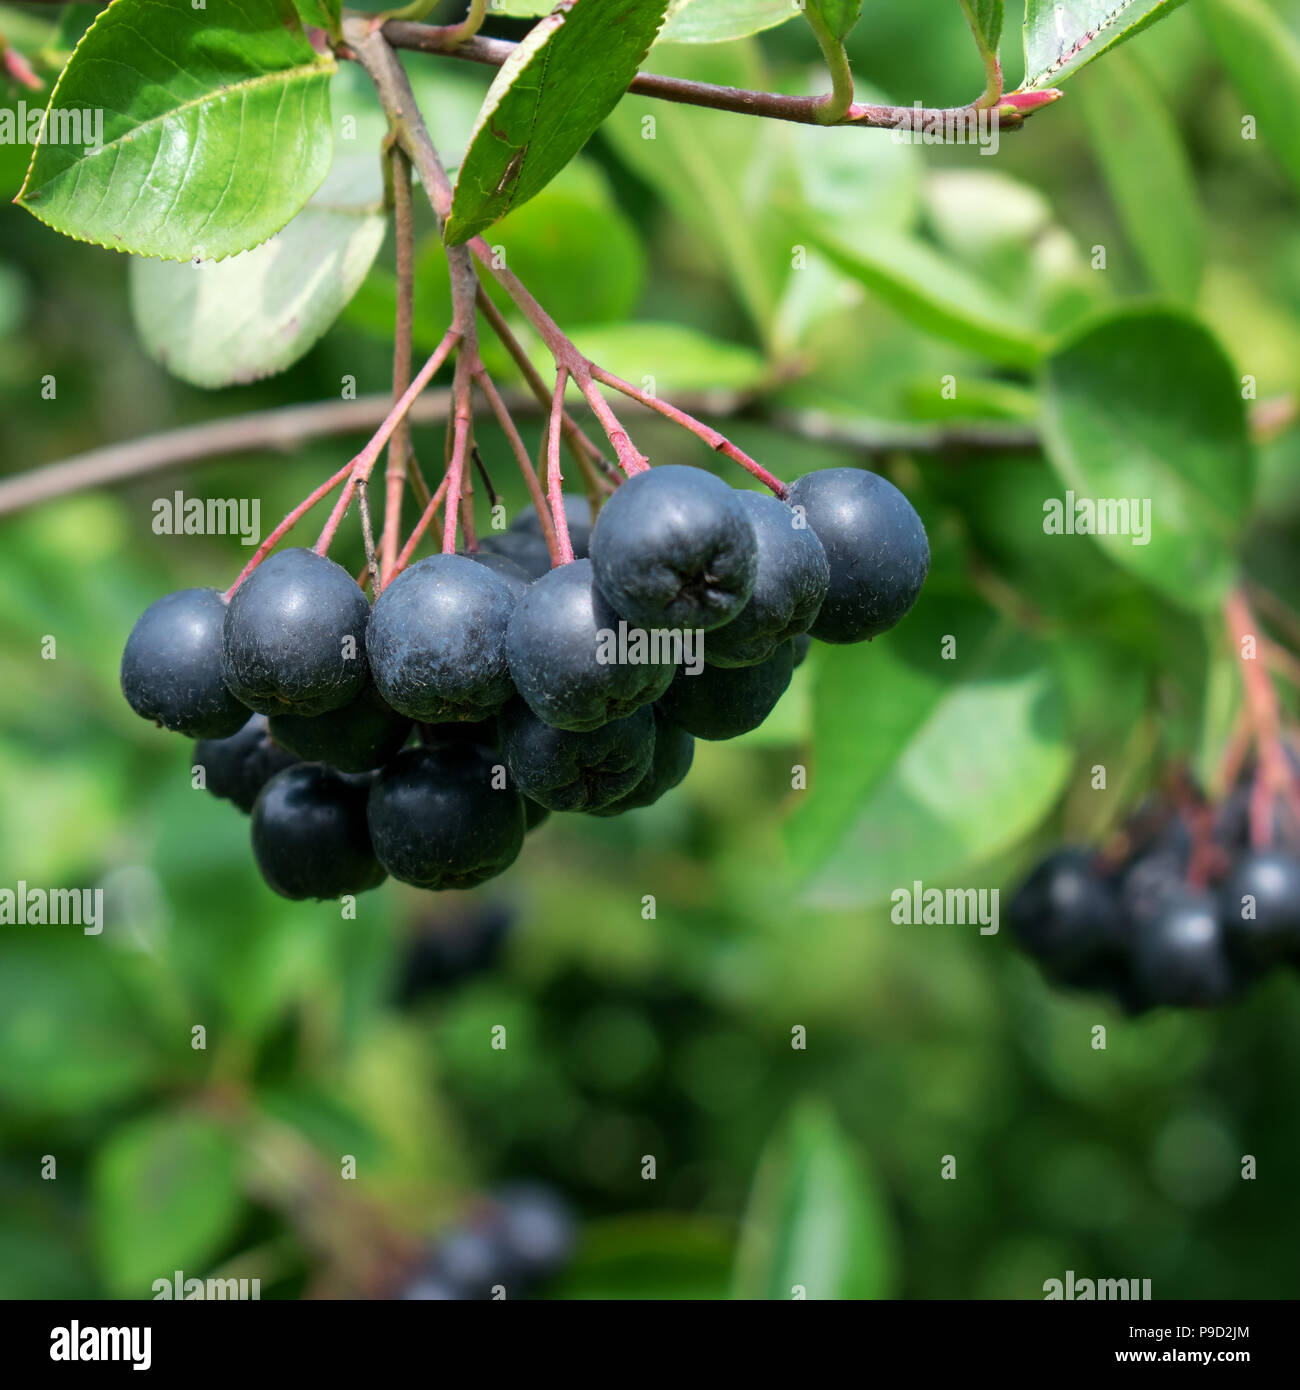 Aronia berries (Aronia melanocarpa, Black Chokeberry) growing in the garden. Stock Photo